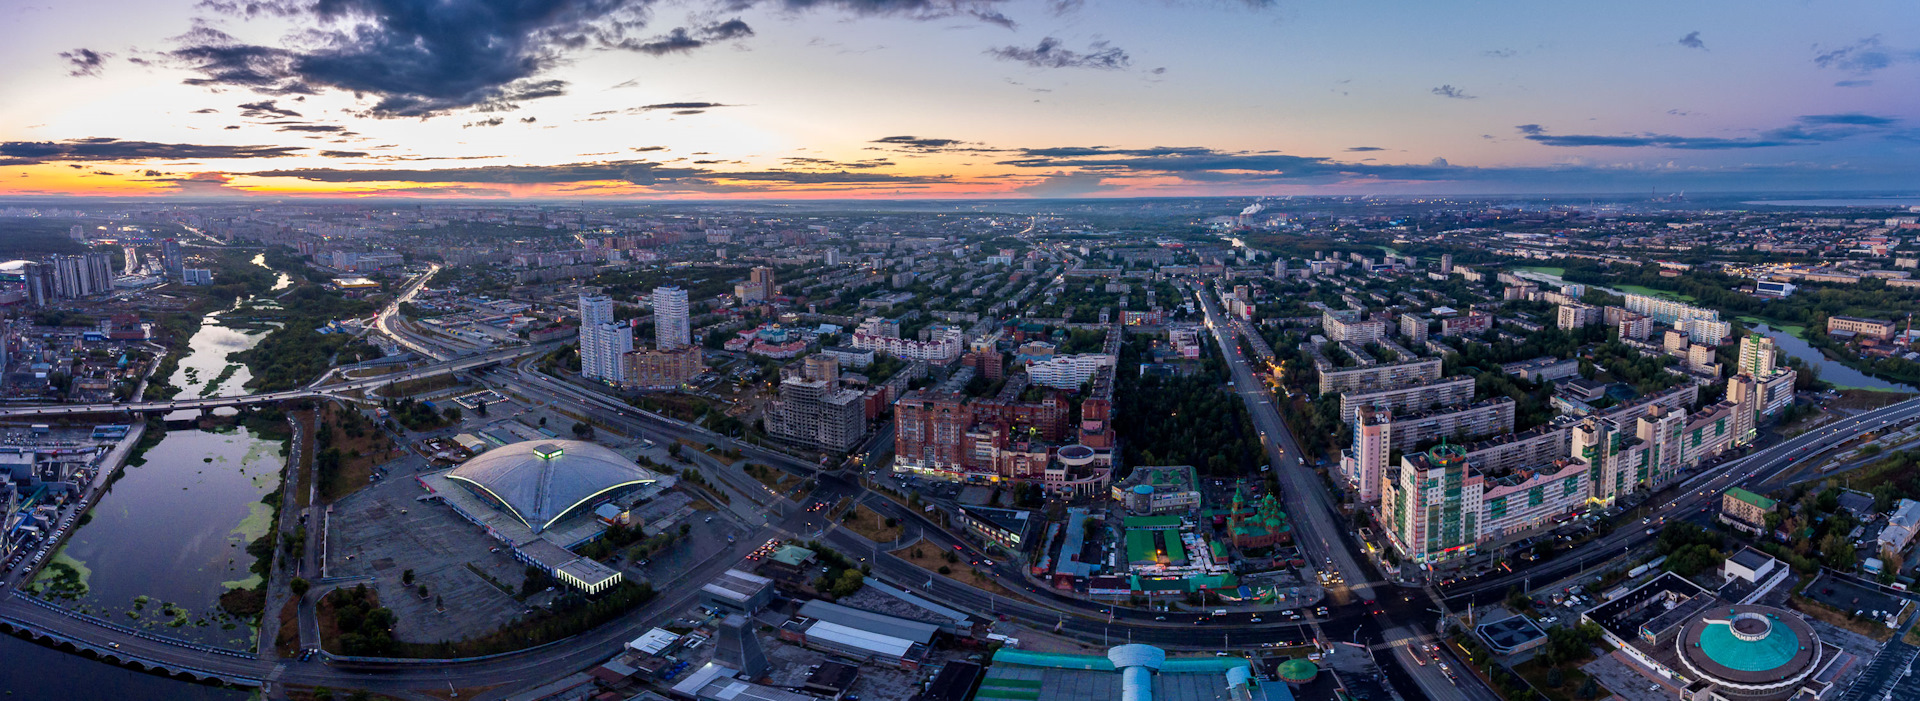 Челябинск панорама города